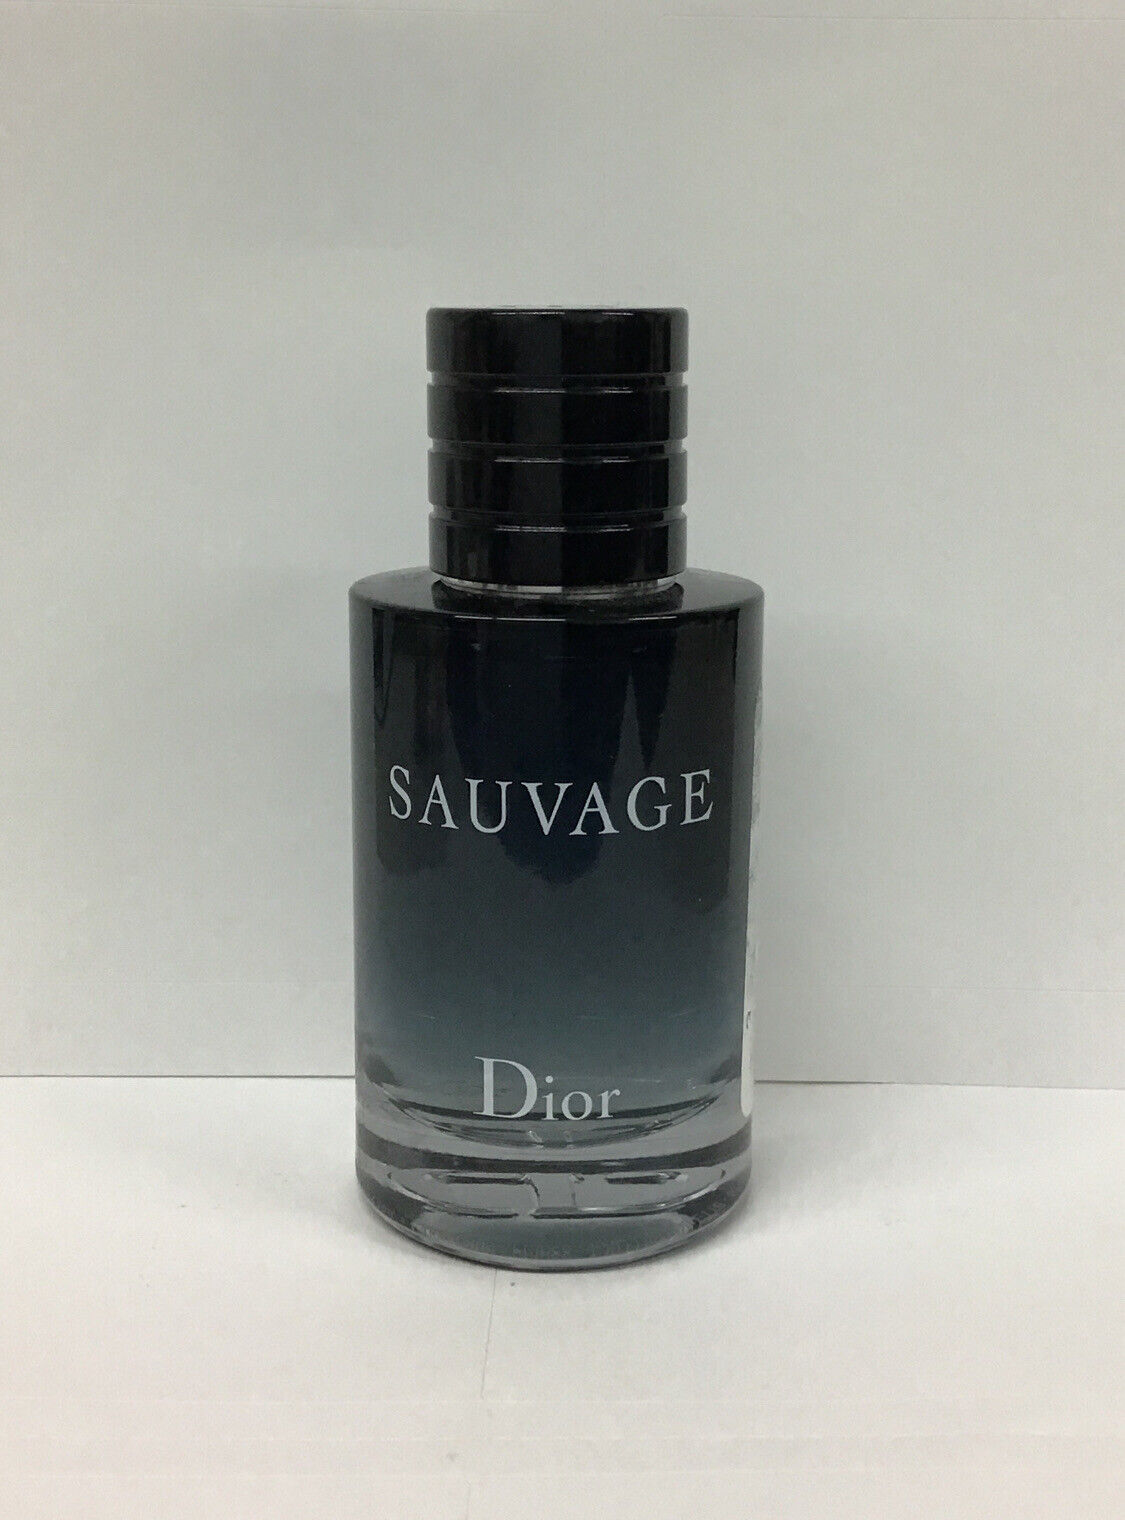 Dior Sauvage By Christian Dior Eau De Toilette Spray 2 Fl Oz, As Pictured. 